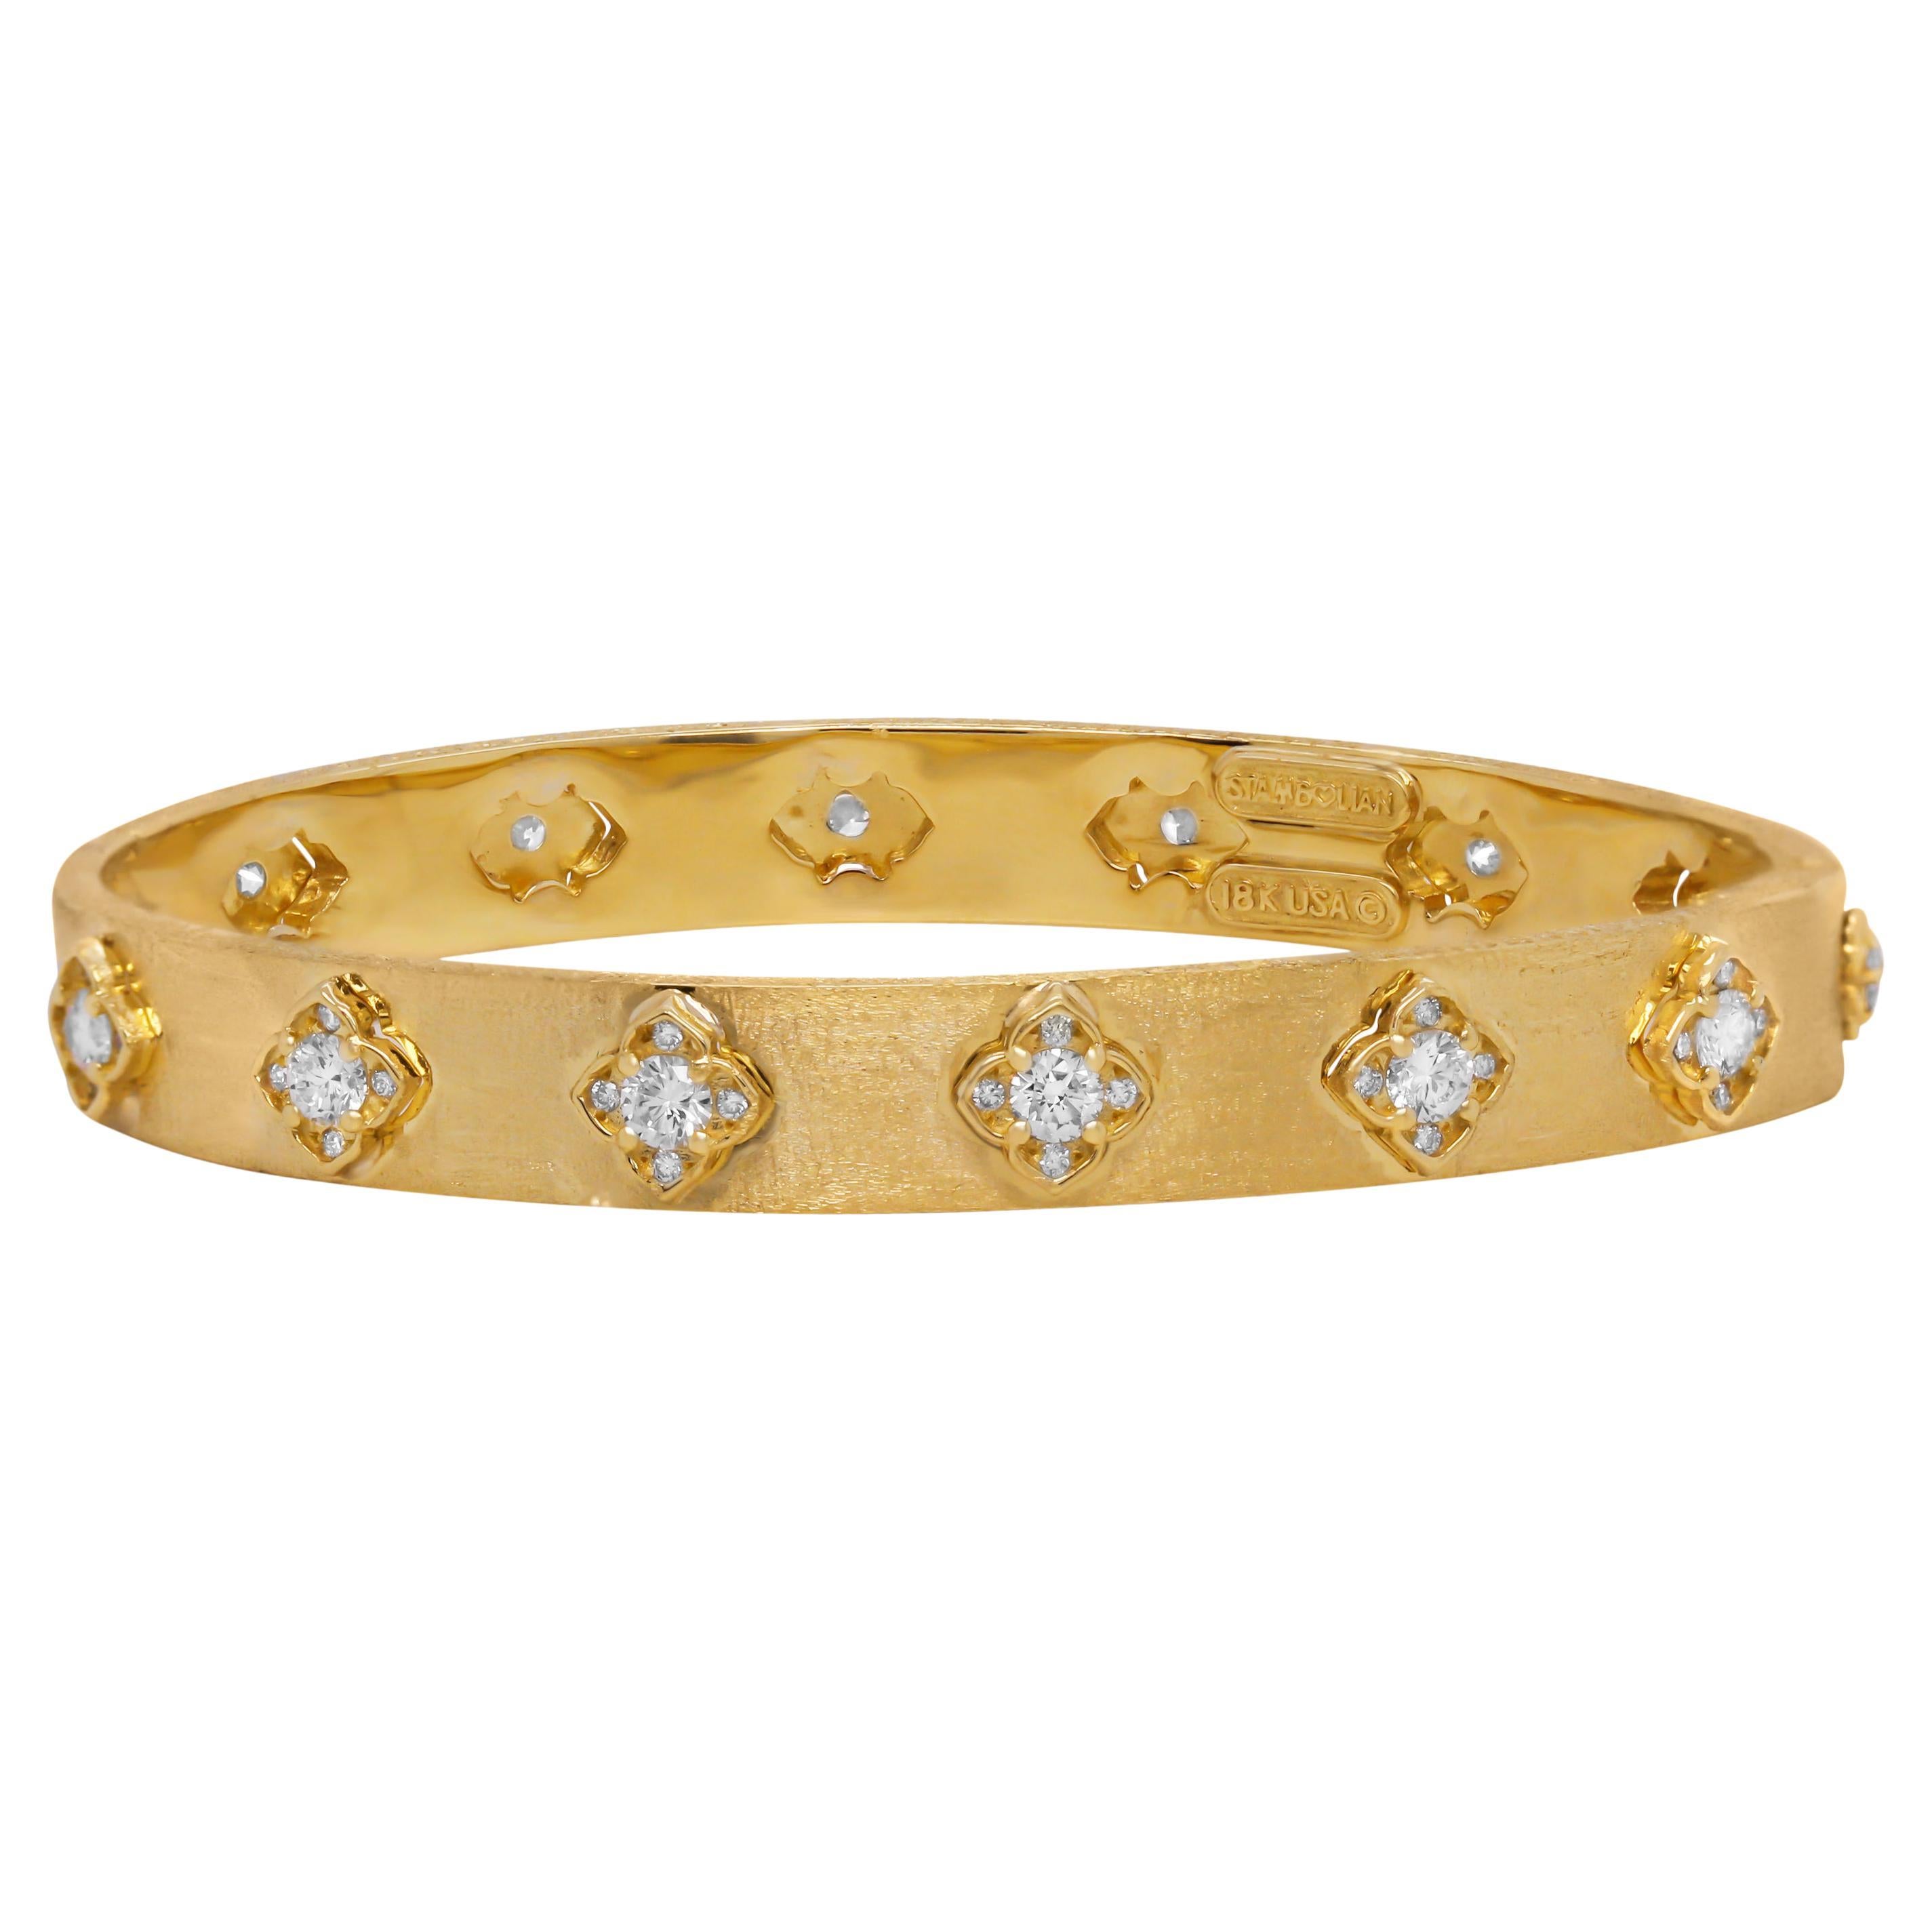 Stambolian 18 Karat Yellow Gold and Diamond Floral Bangle Bracelet